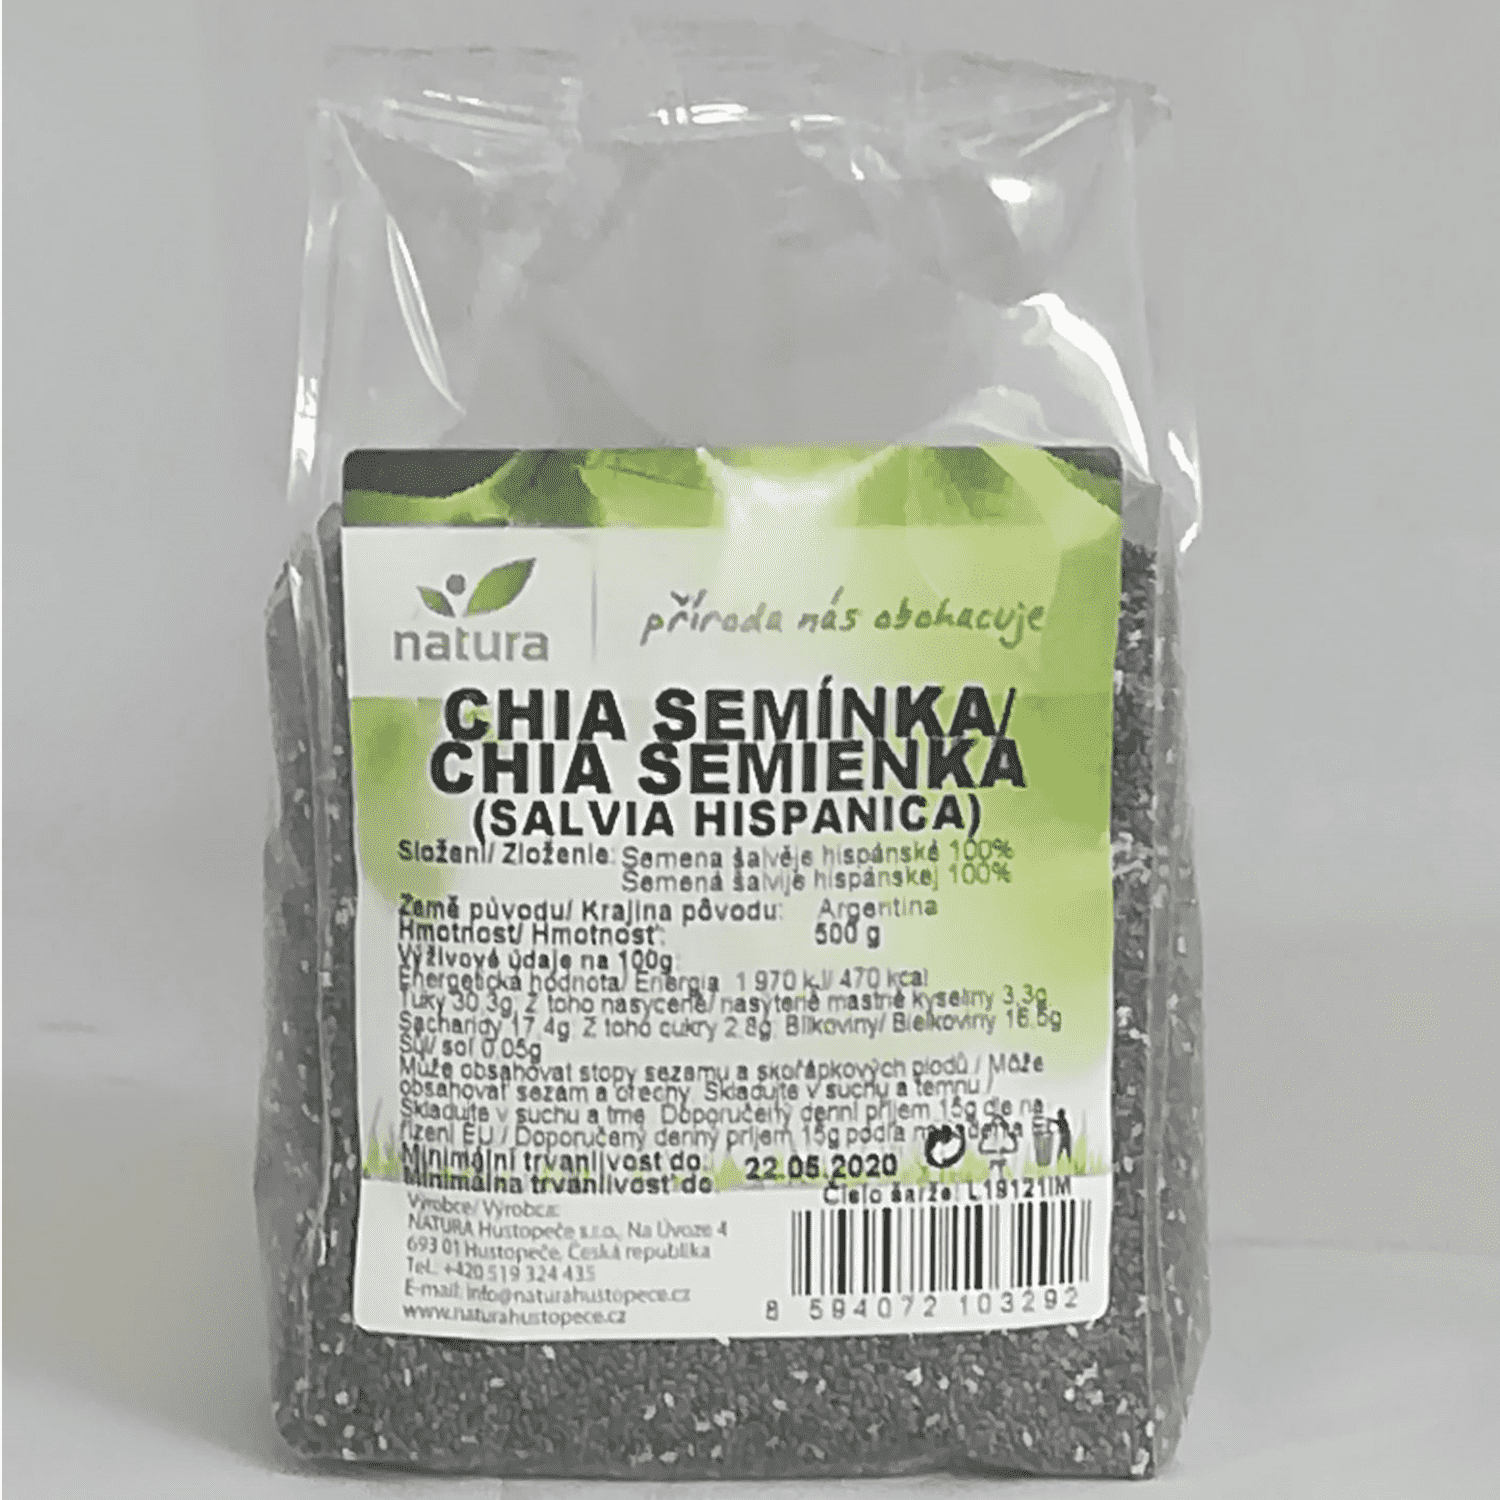 Chia semienka (100g, 500g)